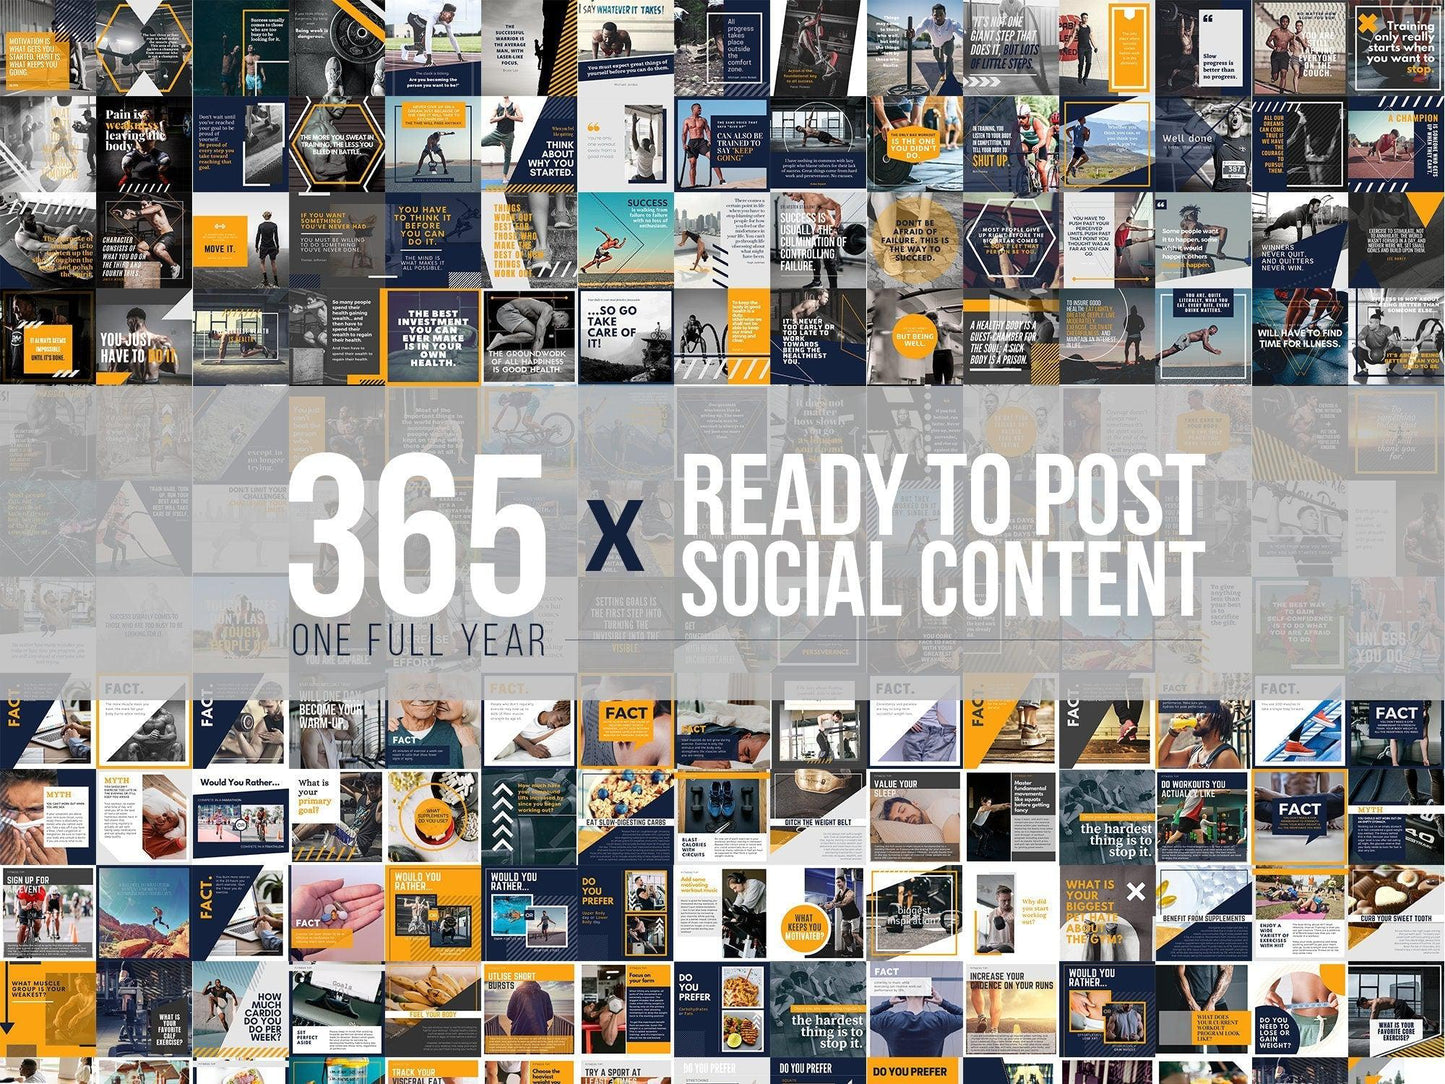 365 Fitness Instagram Template Bundle For Social Media (mustang)